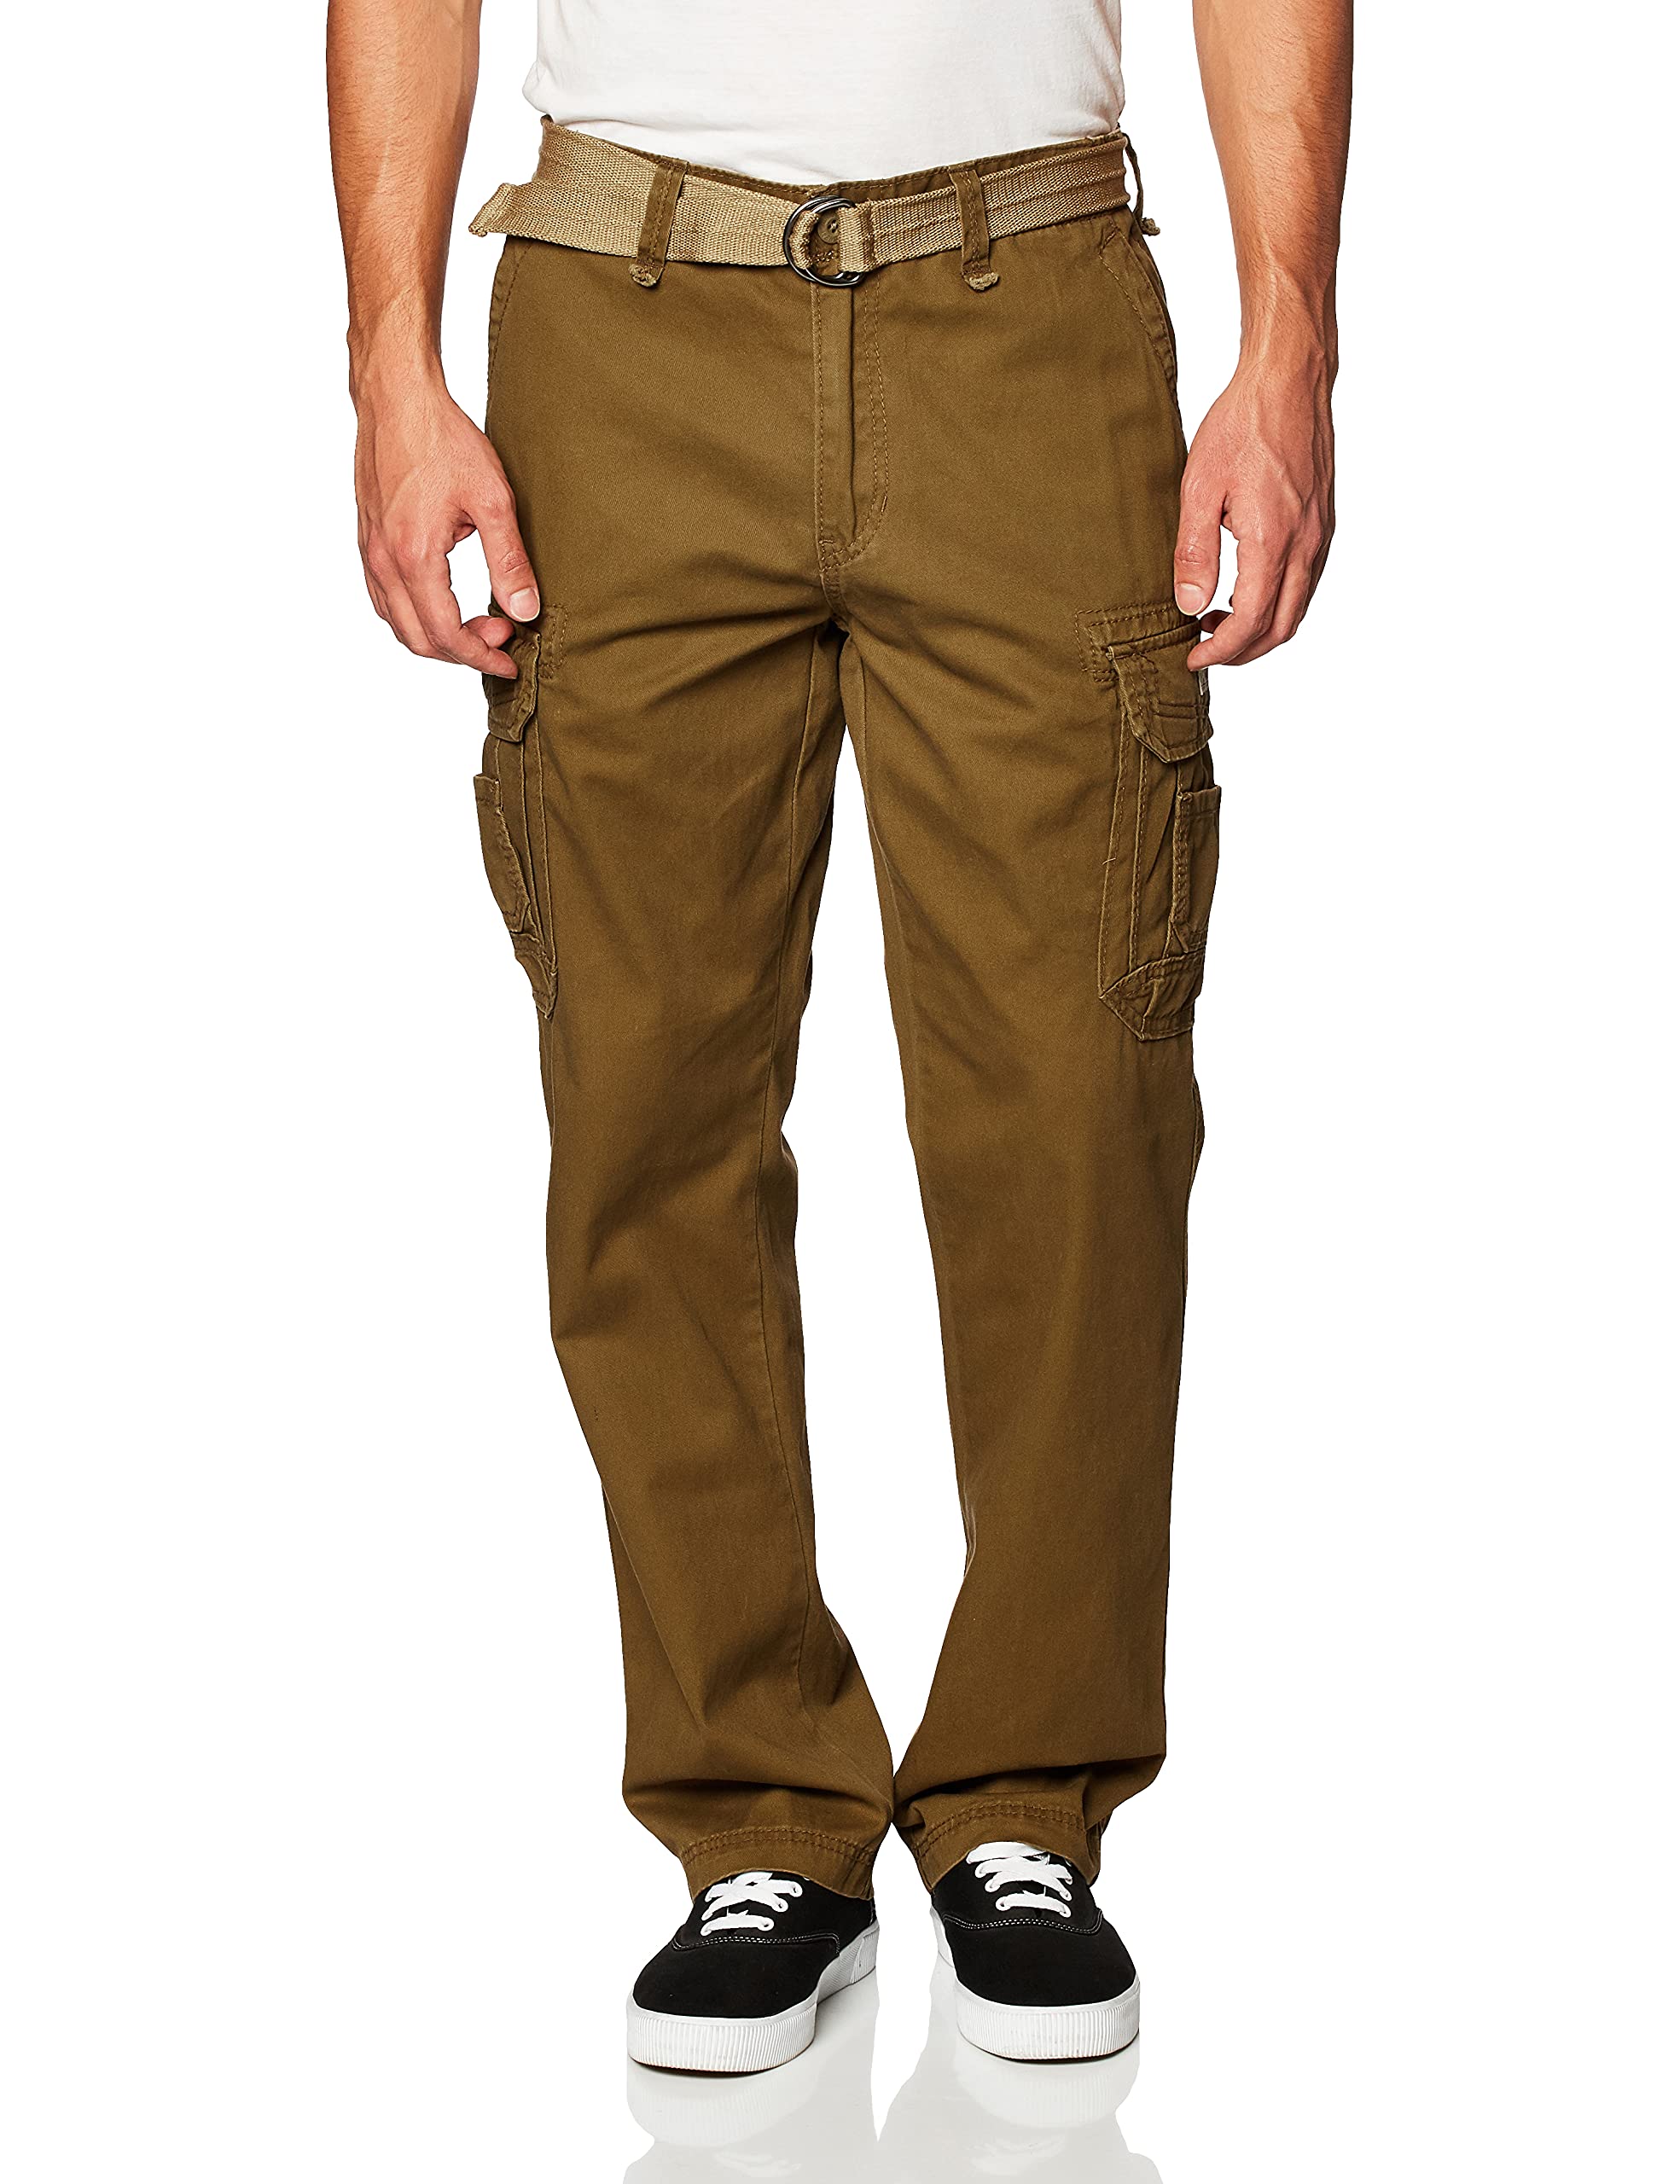 UNIONBAY Brown Cargo Pants | Mercari